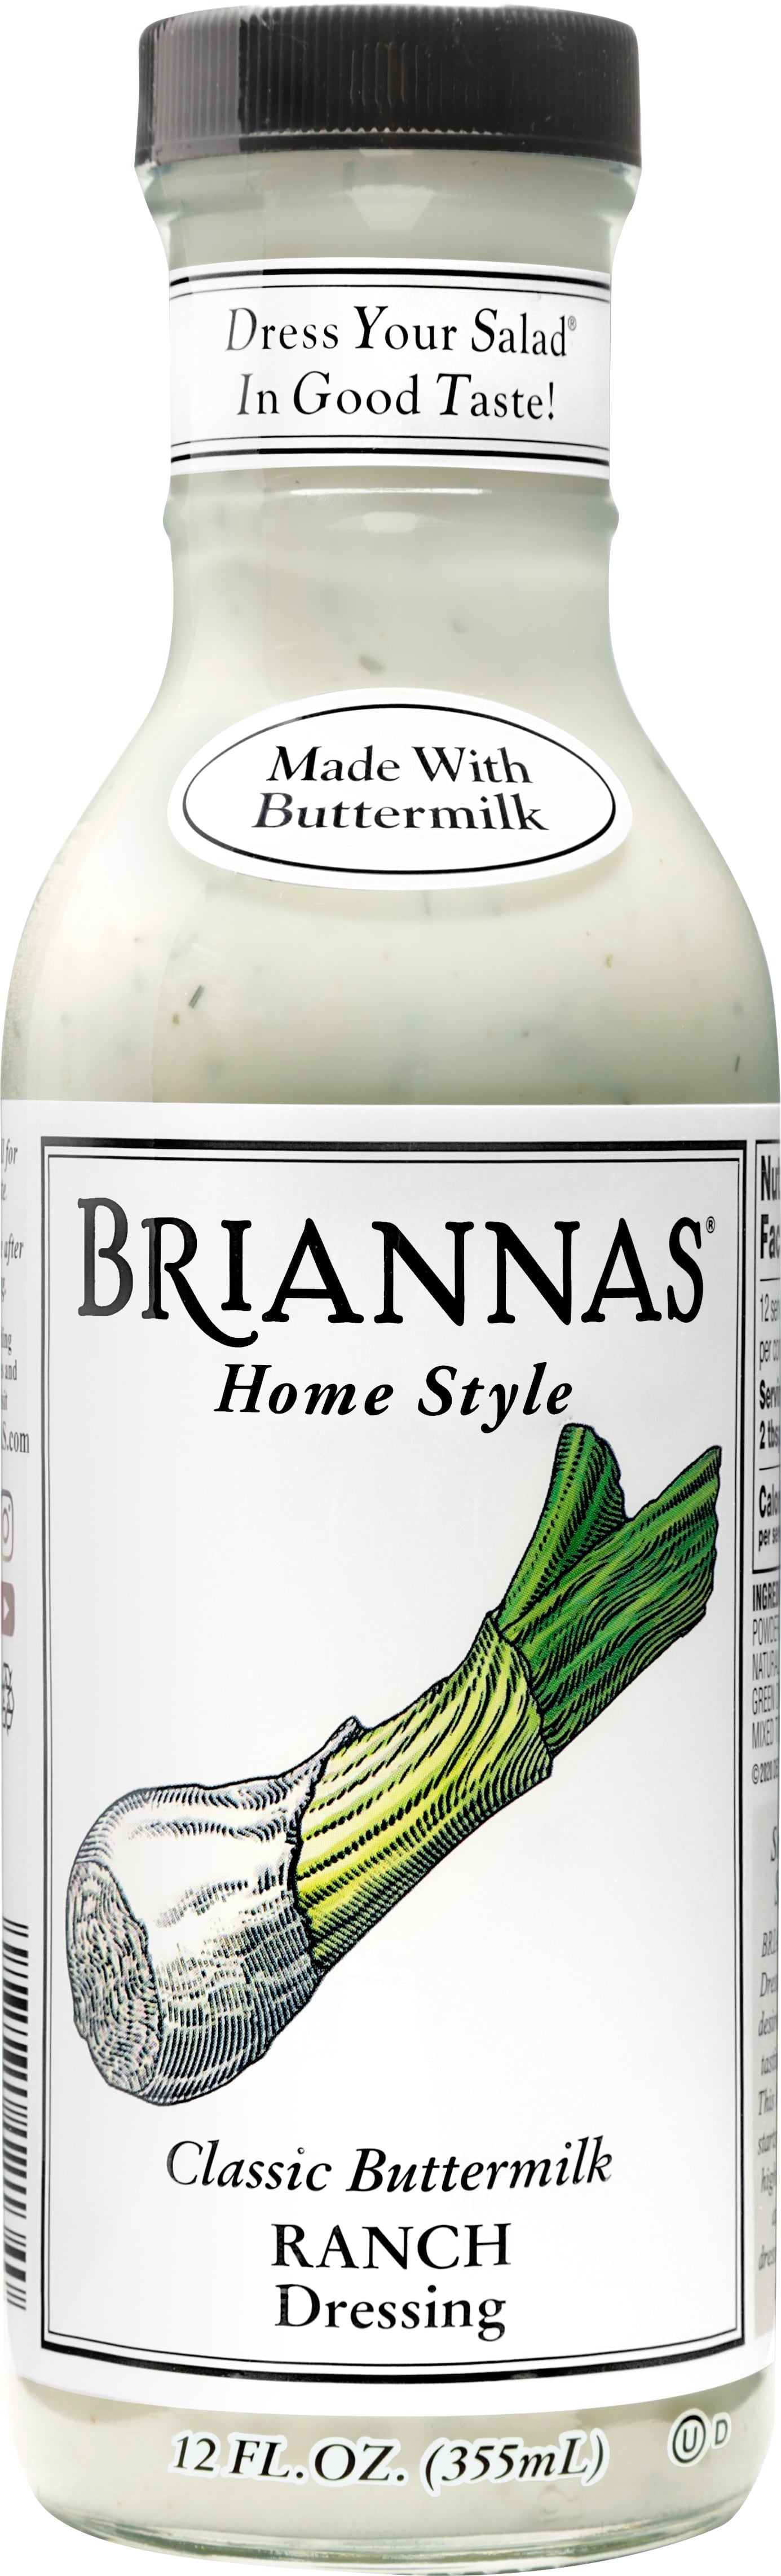 Briannas Home Style Dressing Classic Buttermilk Ranch 12 oz Bottle